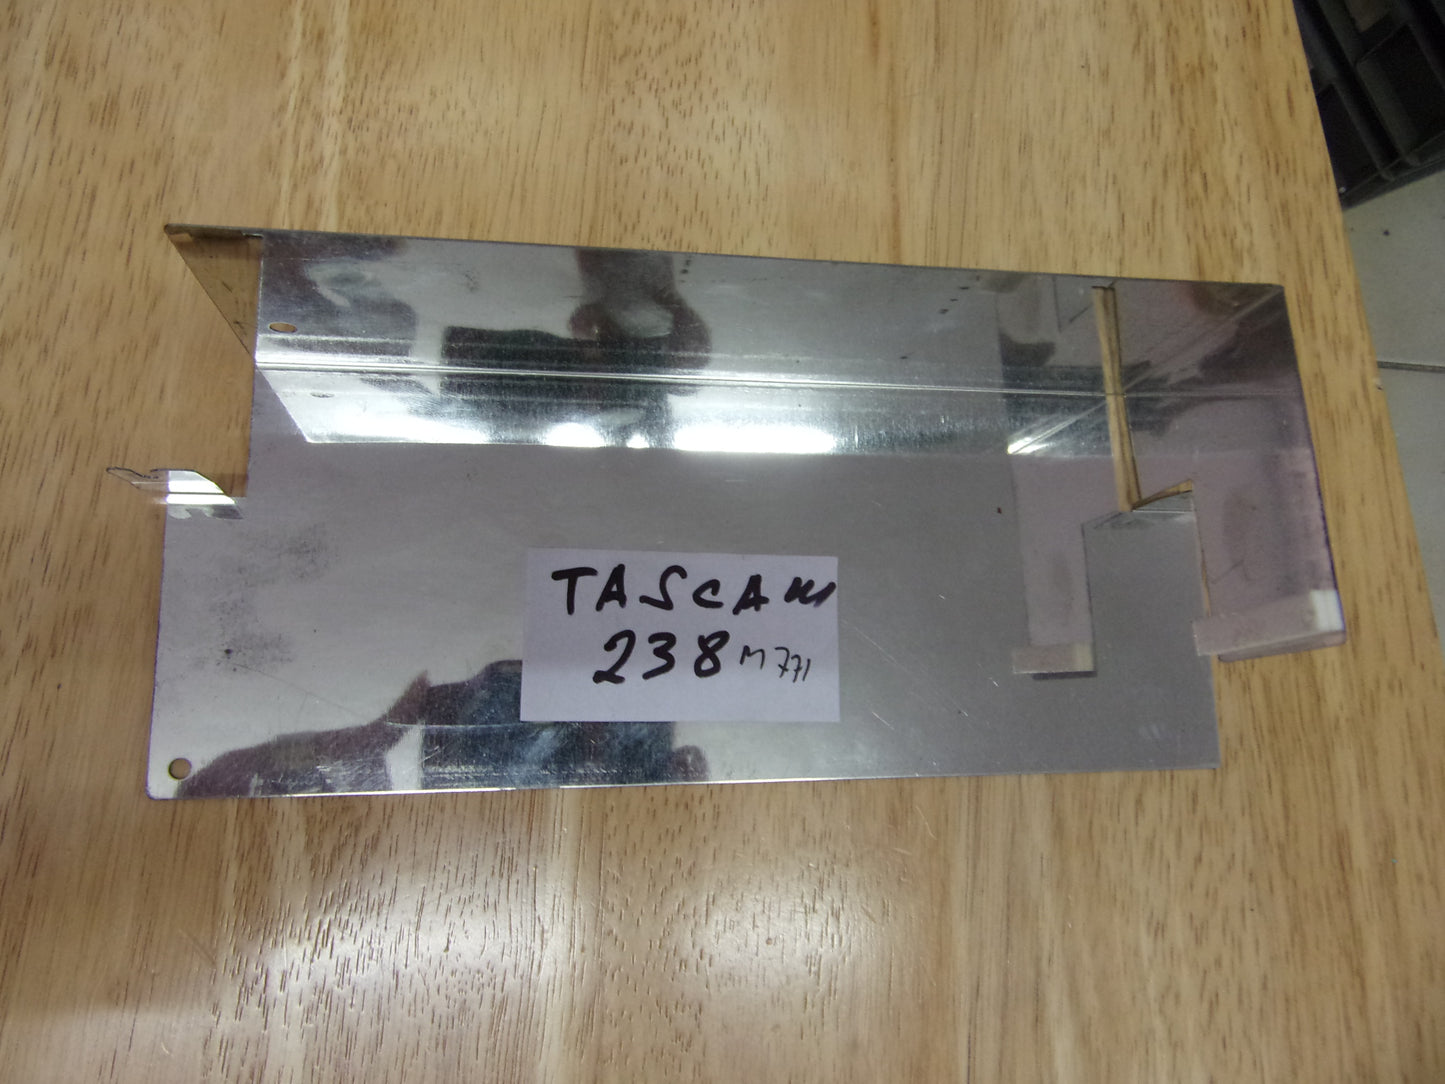 Tascam 238 internal screening plate